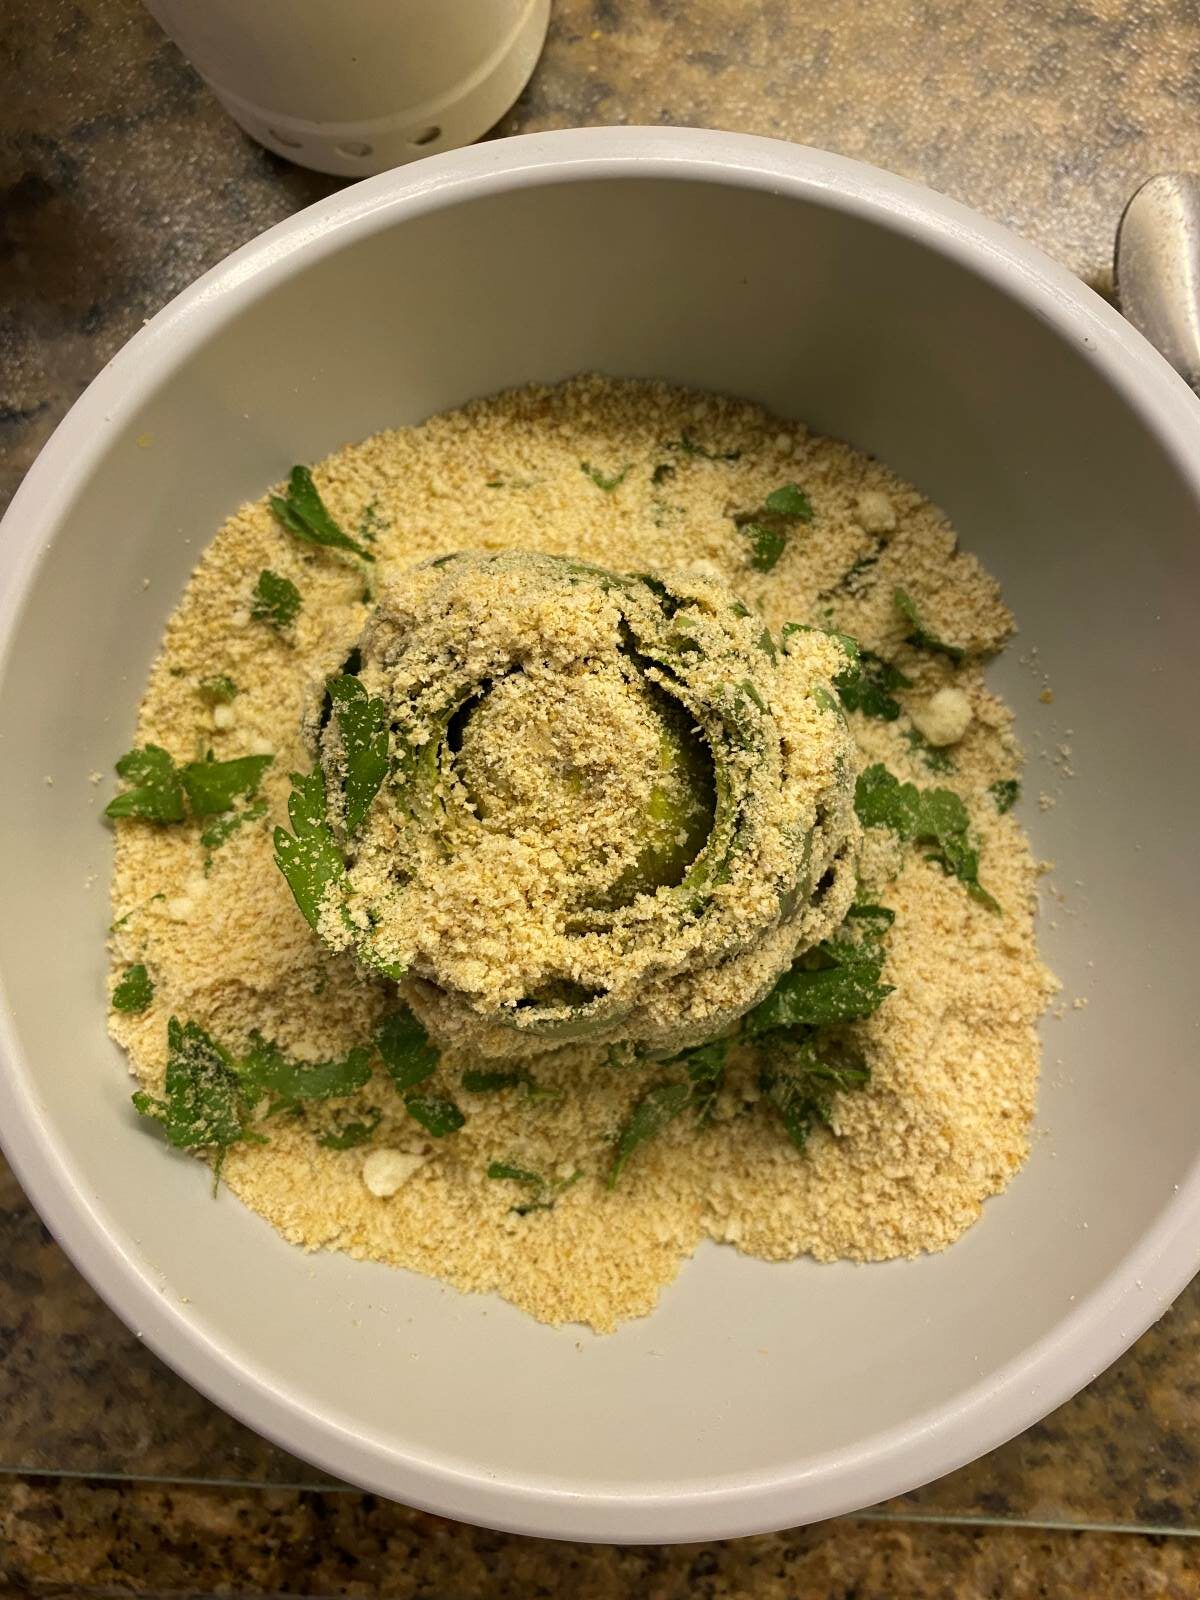 breadcrumbs, parsley, cheese, garlic and artichoke in a grey bowl